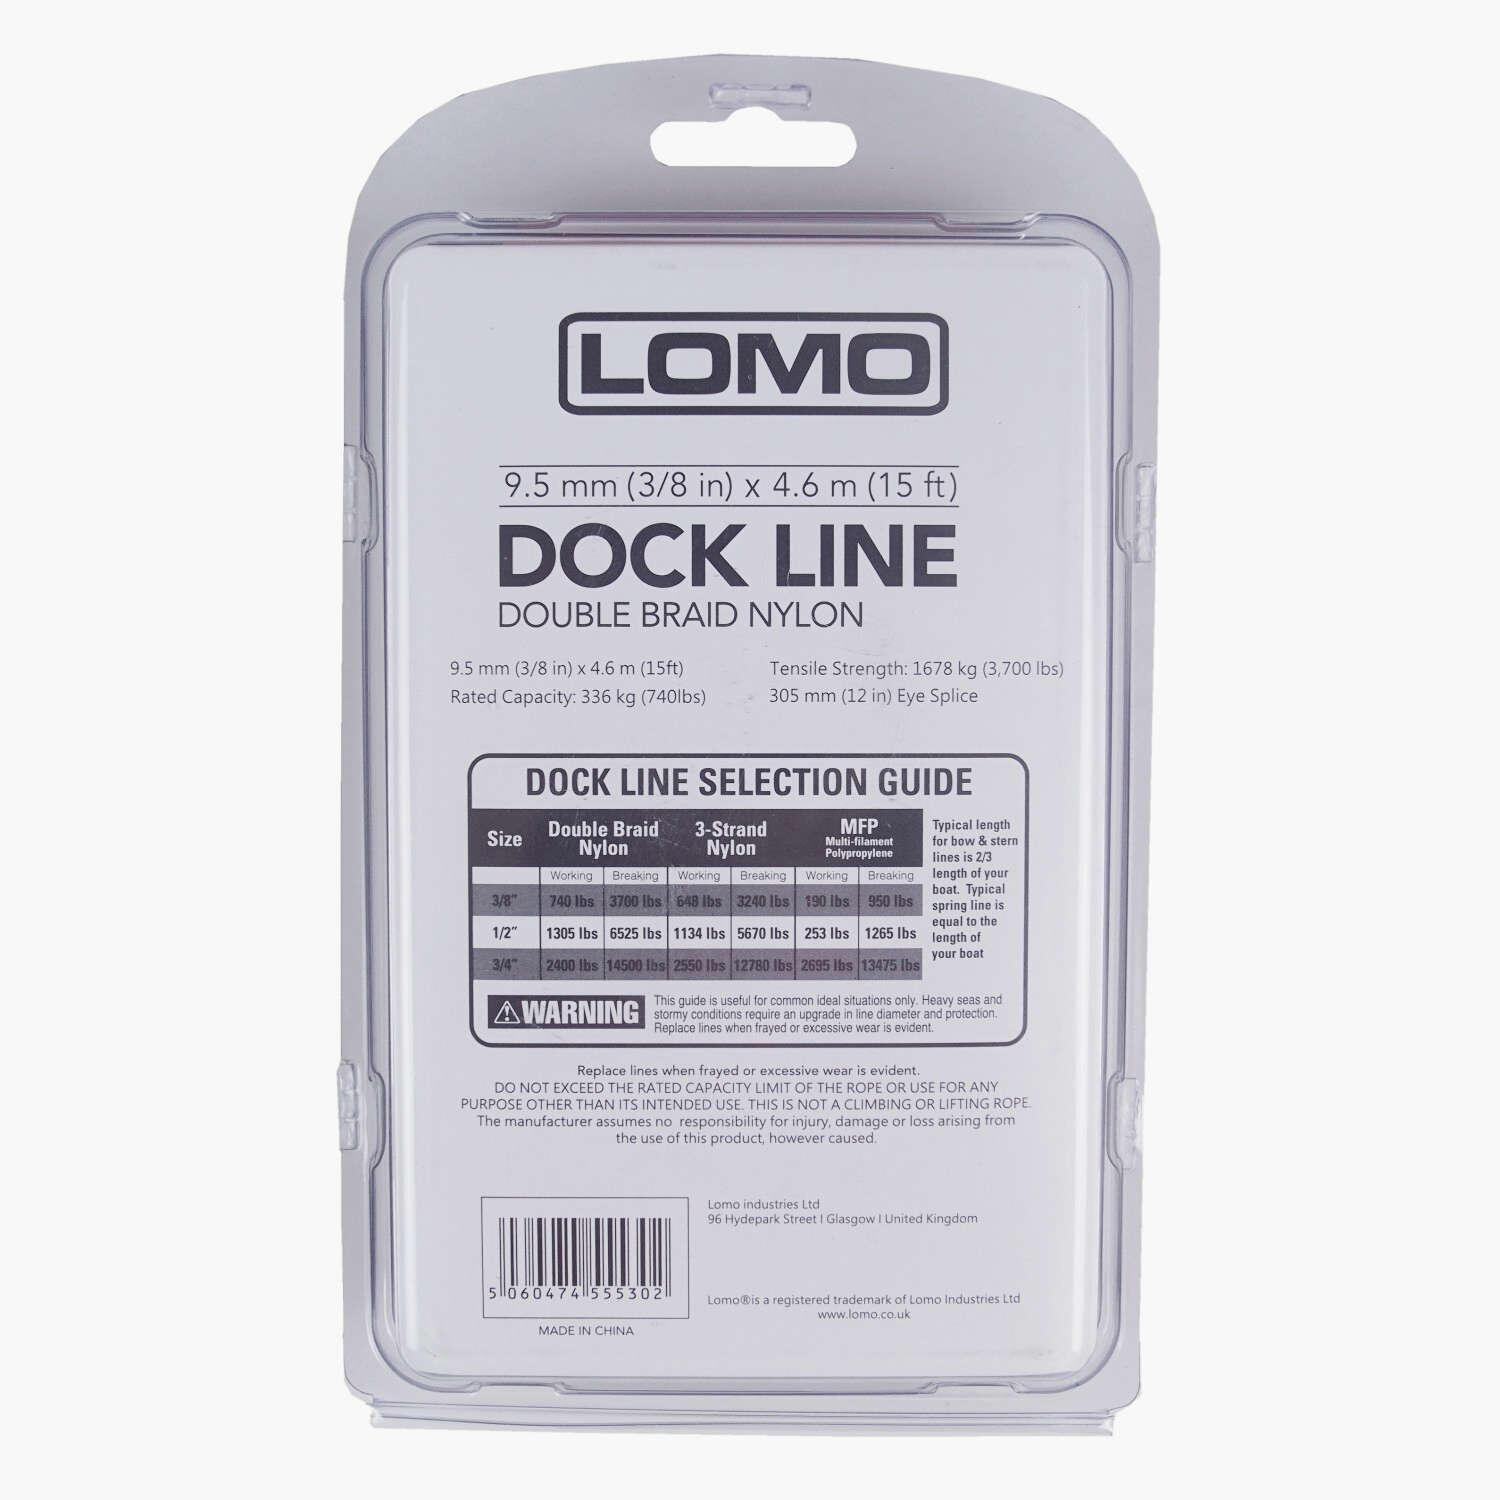 Lomo Dock Line / Mooring Line, 9.5mm x 4.6m Double Braided Nylon Rope - Black 4/5